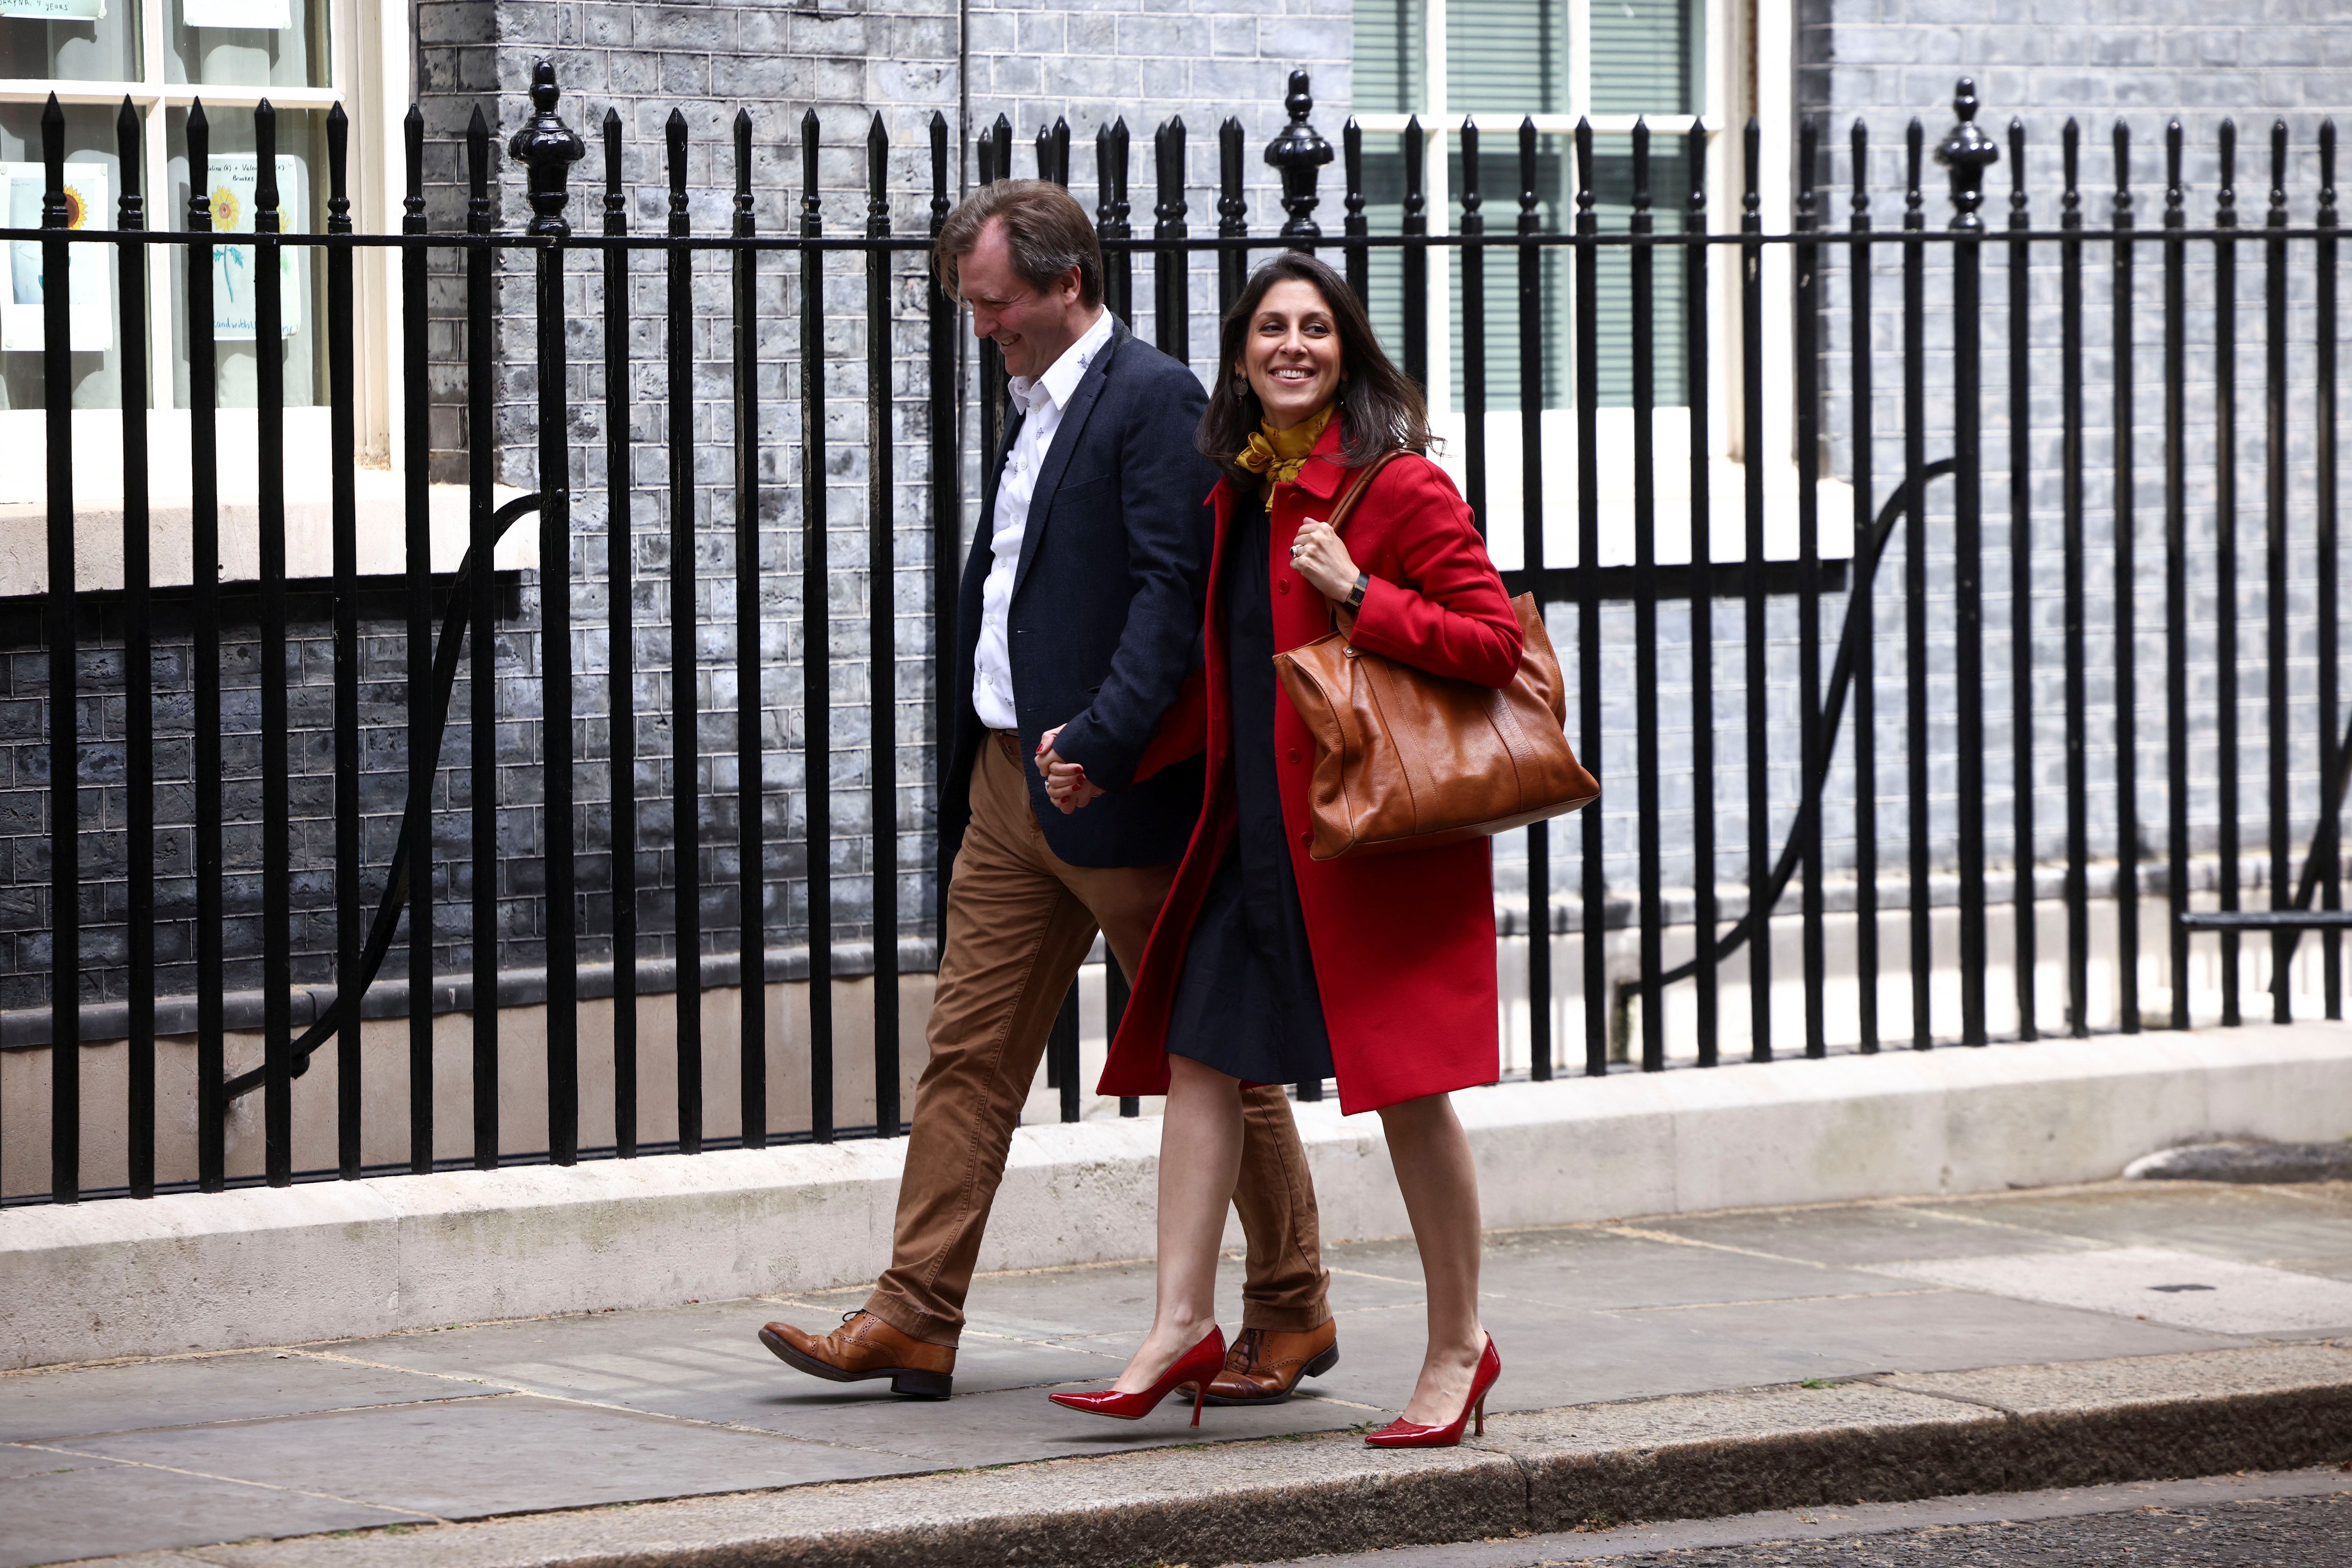 British PM Johnson meets with Nazanin Zaghari-Ratcliffe at Downing Street in London